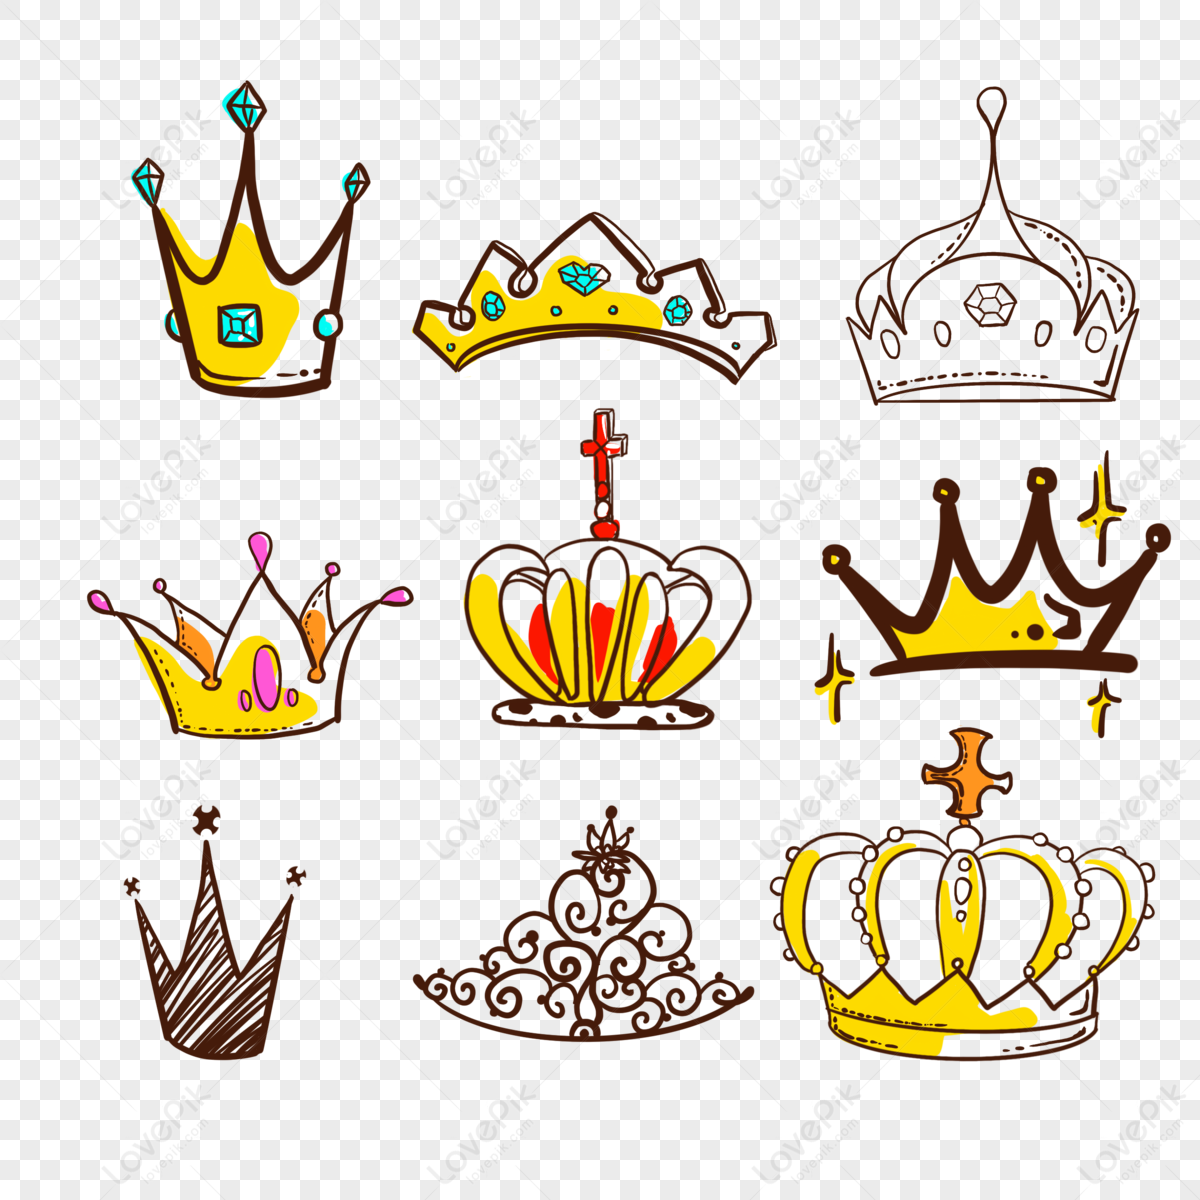 Princess Crown SVG Cut file by Creative Fabrica Crafts · Creative Fabrica